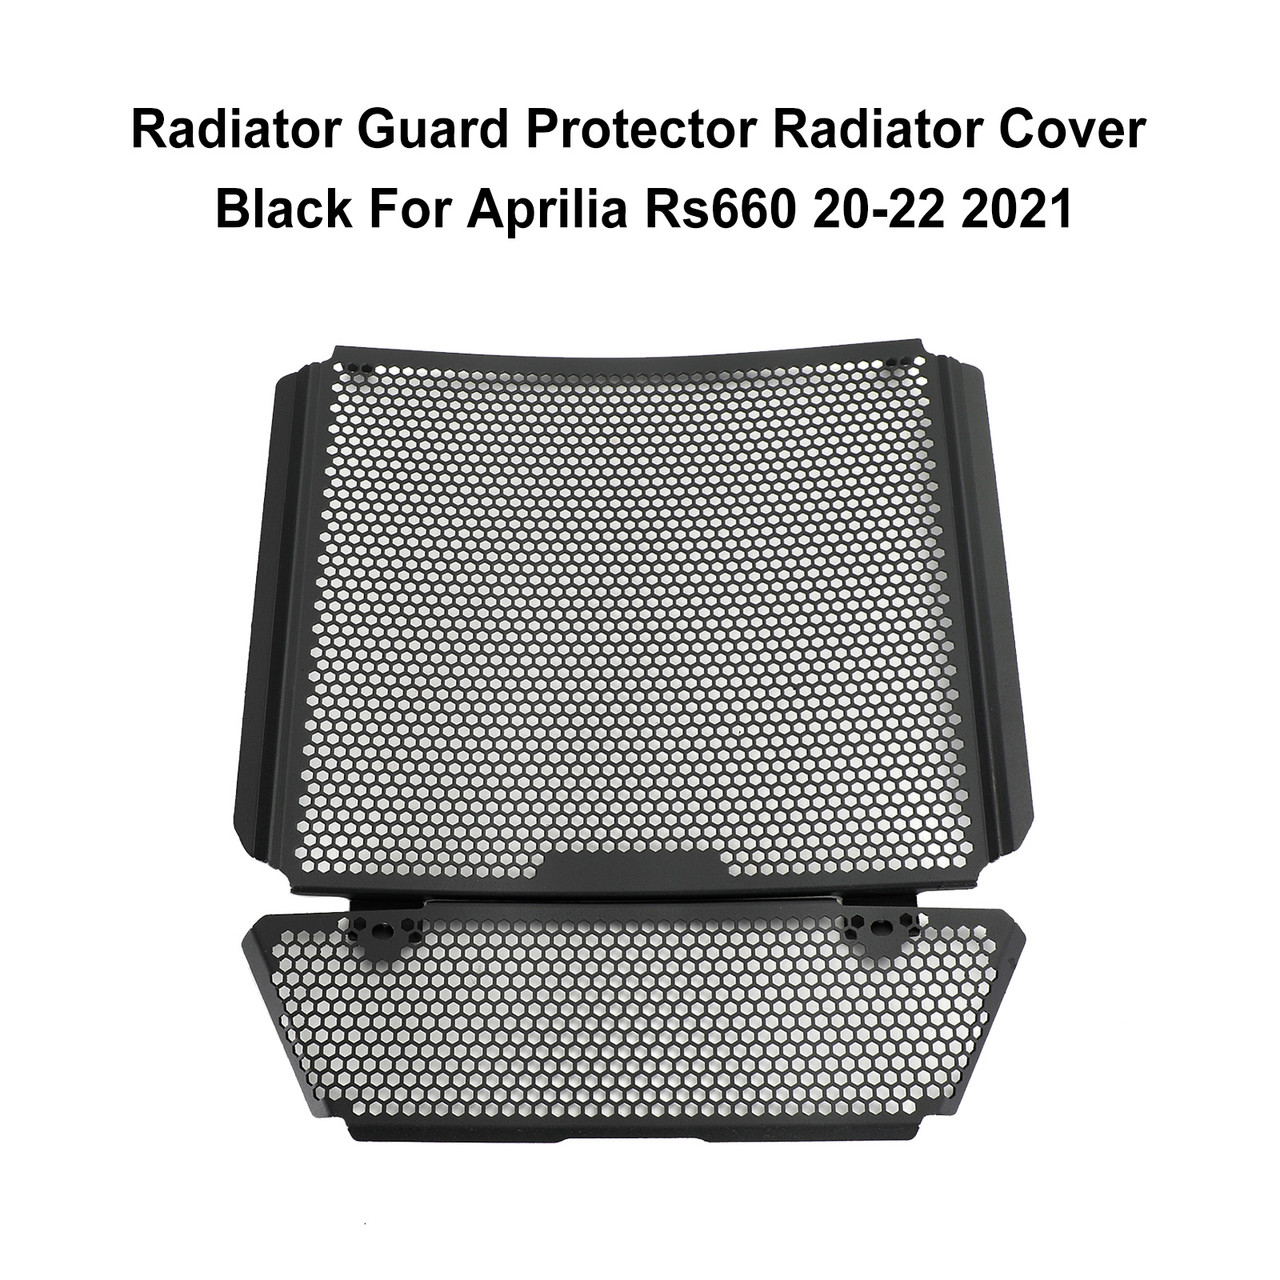 Radiator Guard Protector Radiator Cover Black For Aprilia Rs660 20-22